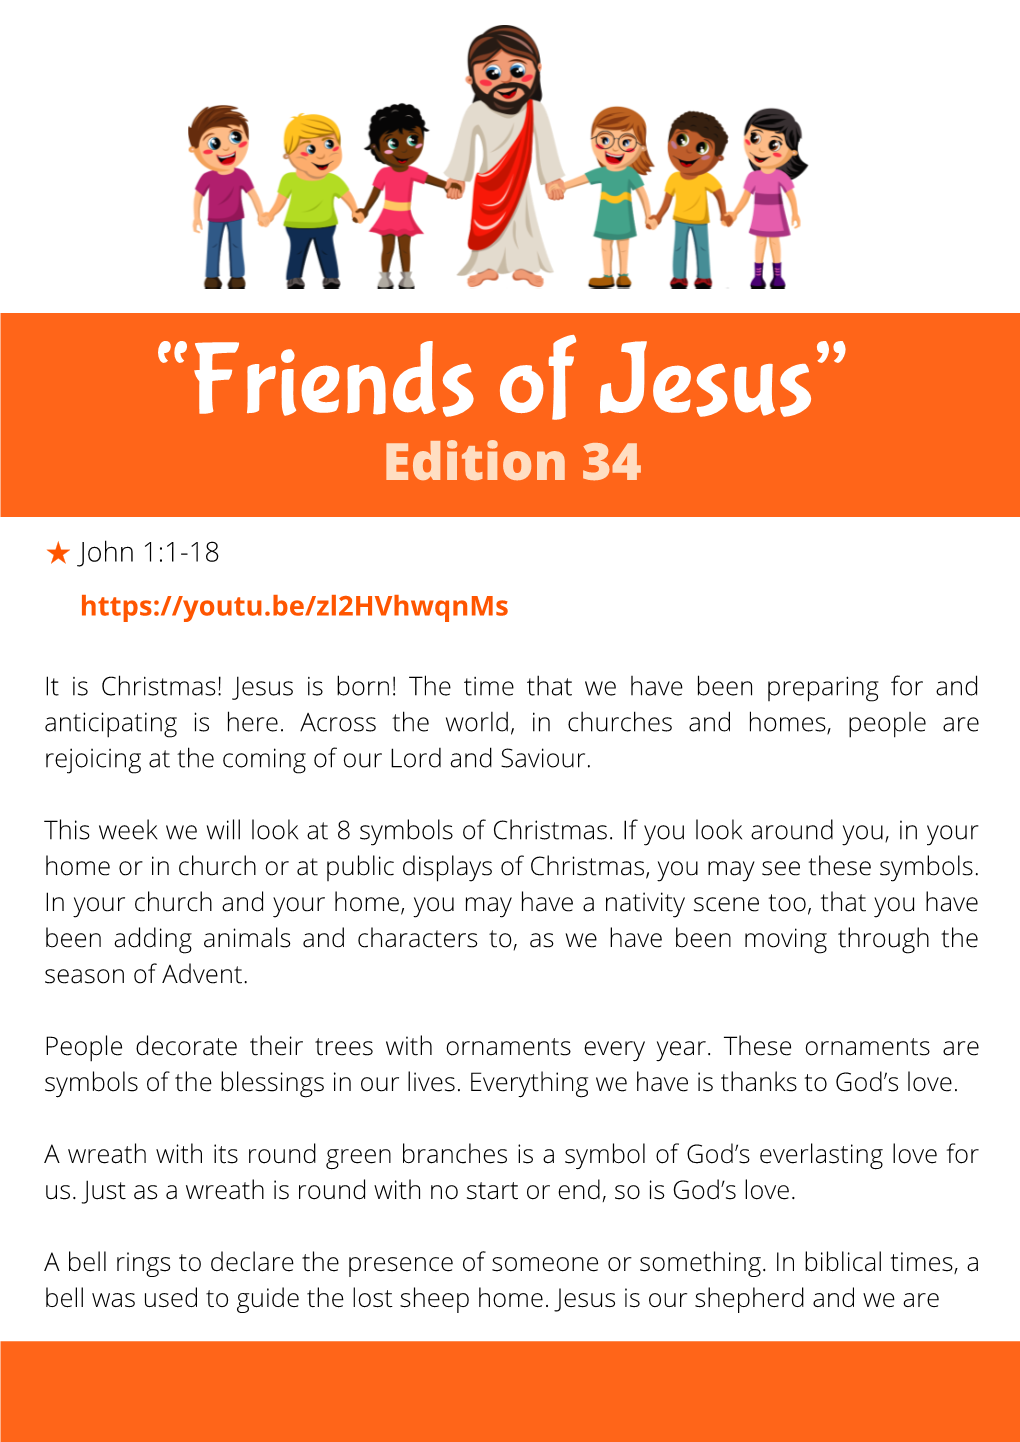 Friends of Jesus” Edition 34